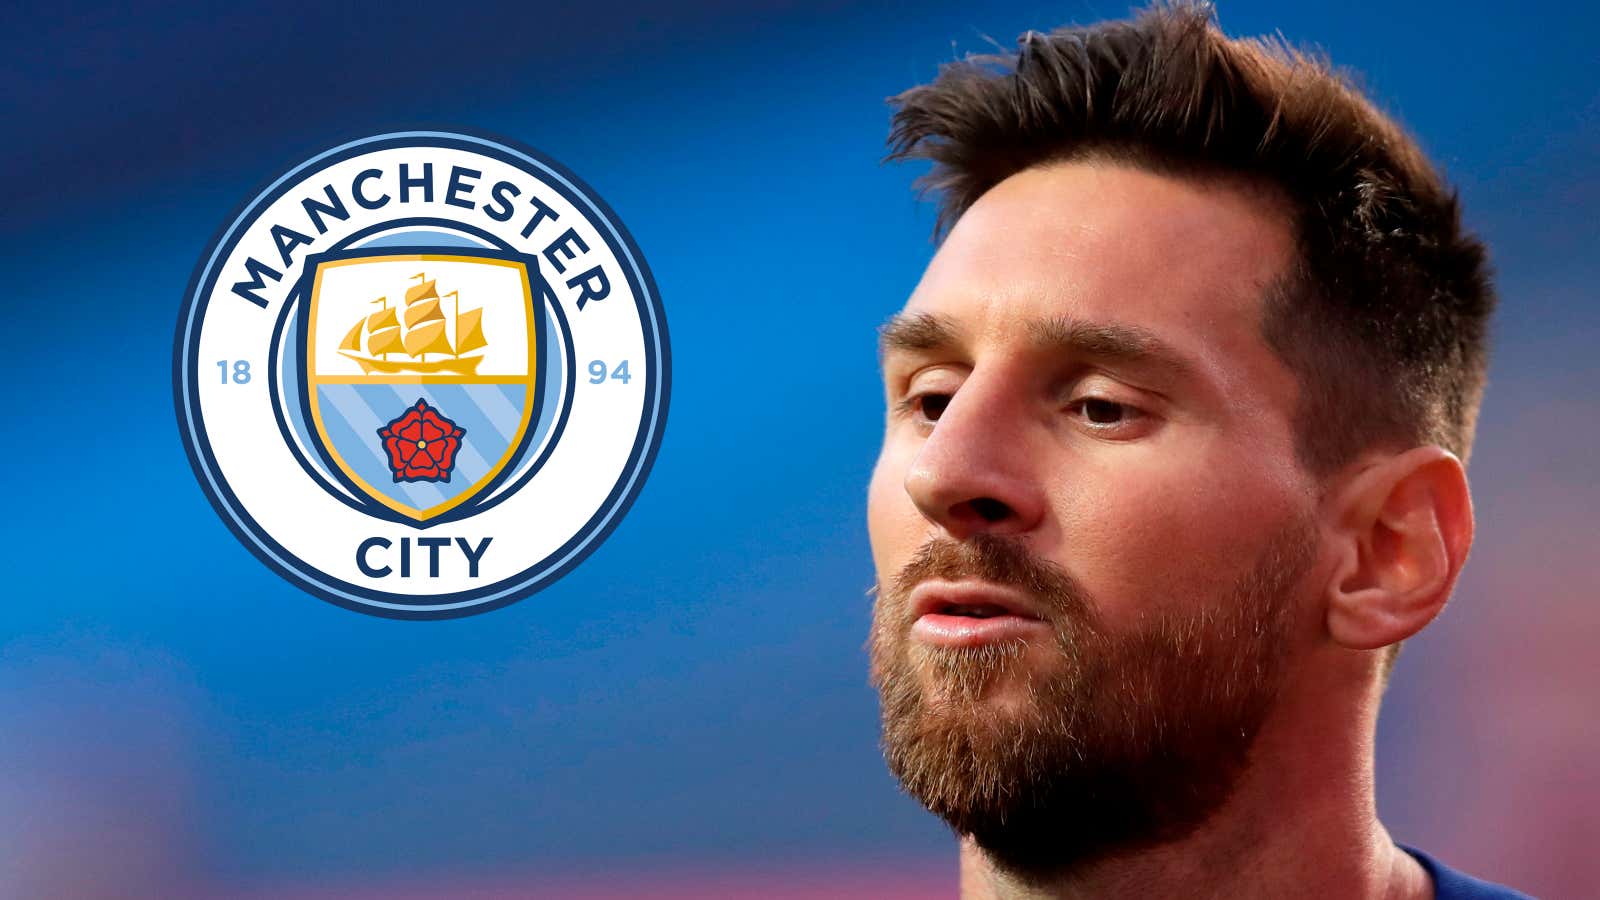 Lionel Messi Barcelona/Man City logo 2019-20